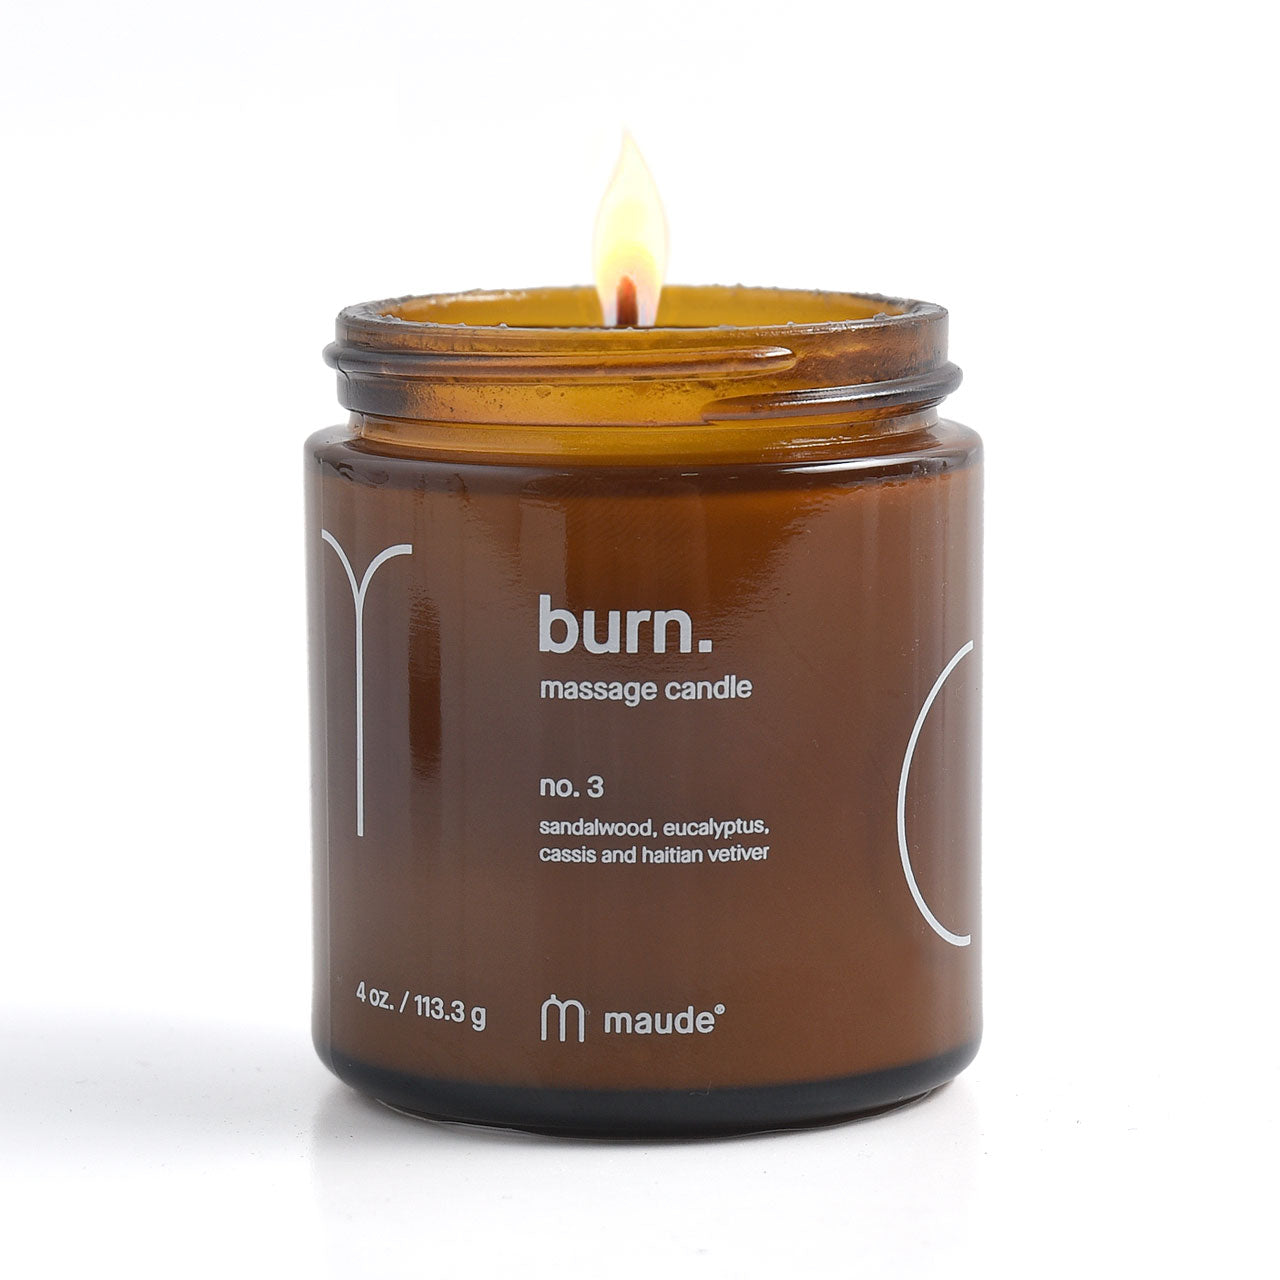 Maude Burn Massage Candle